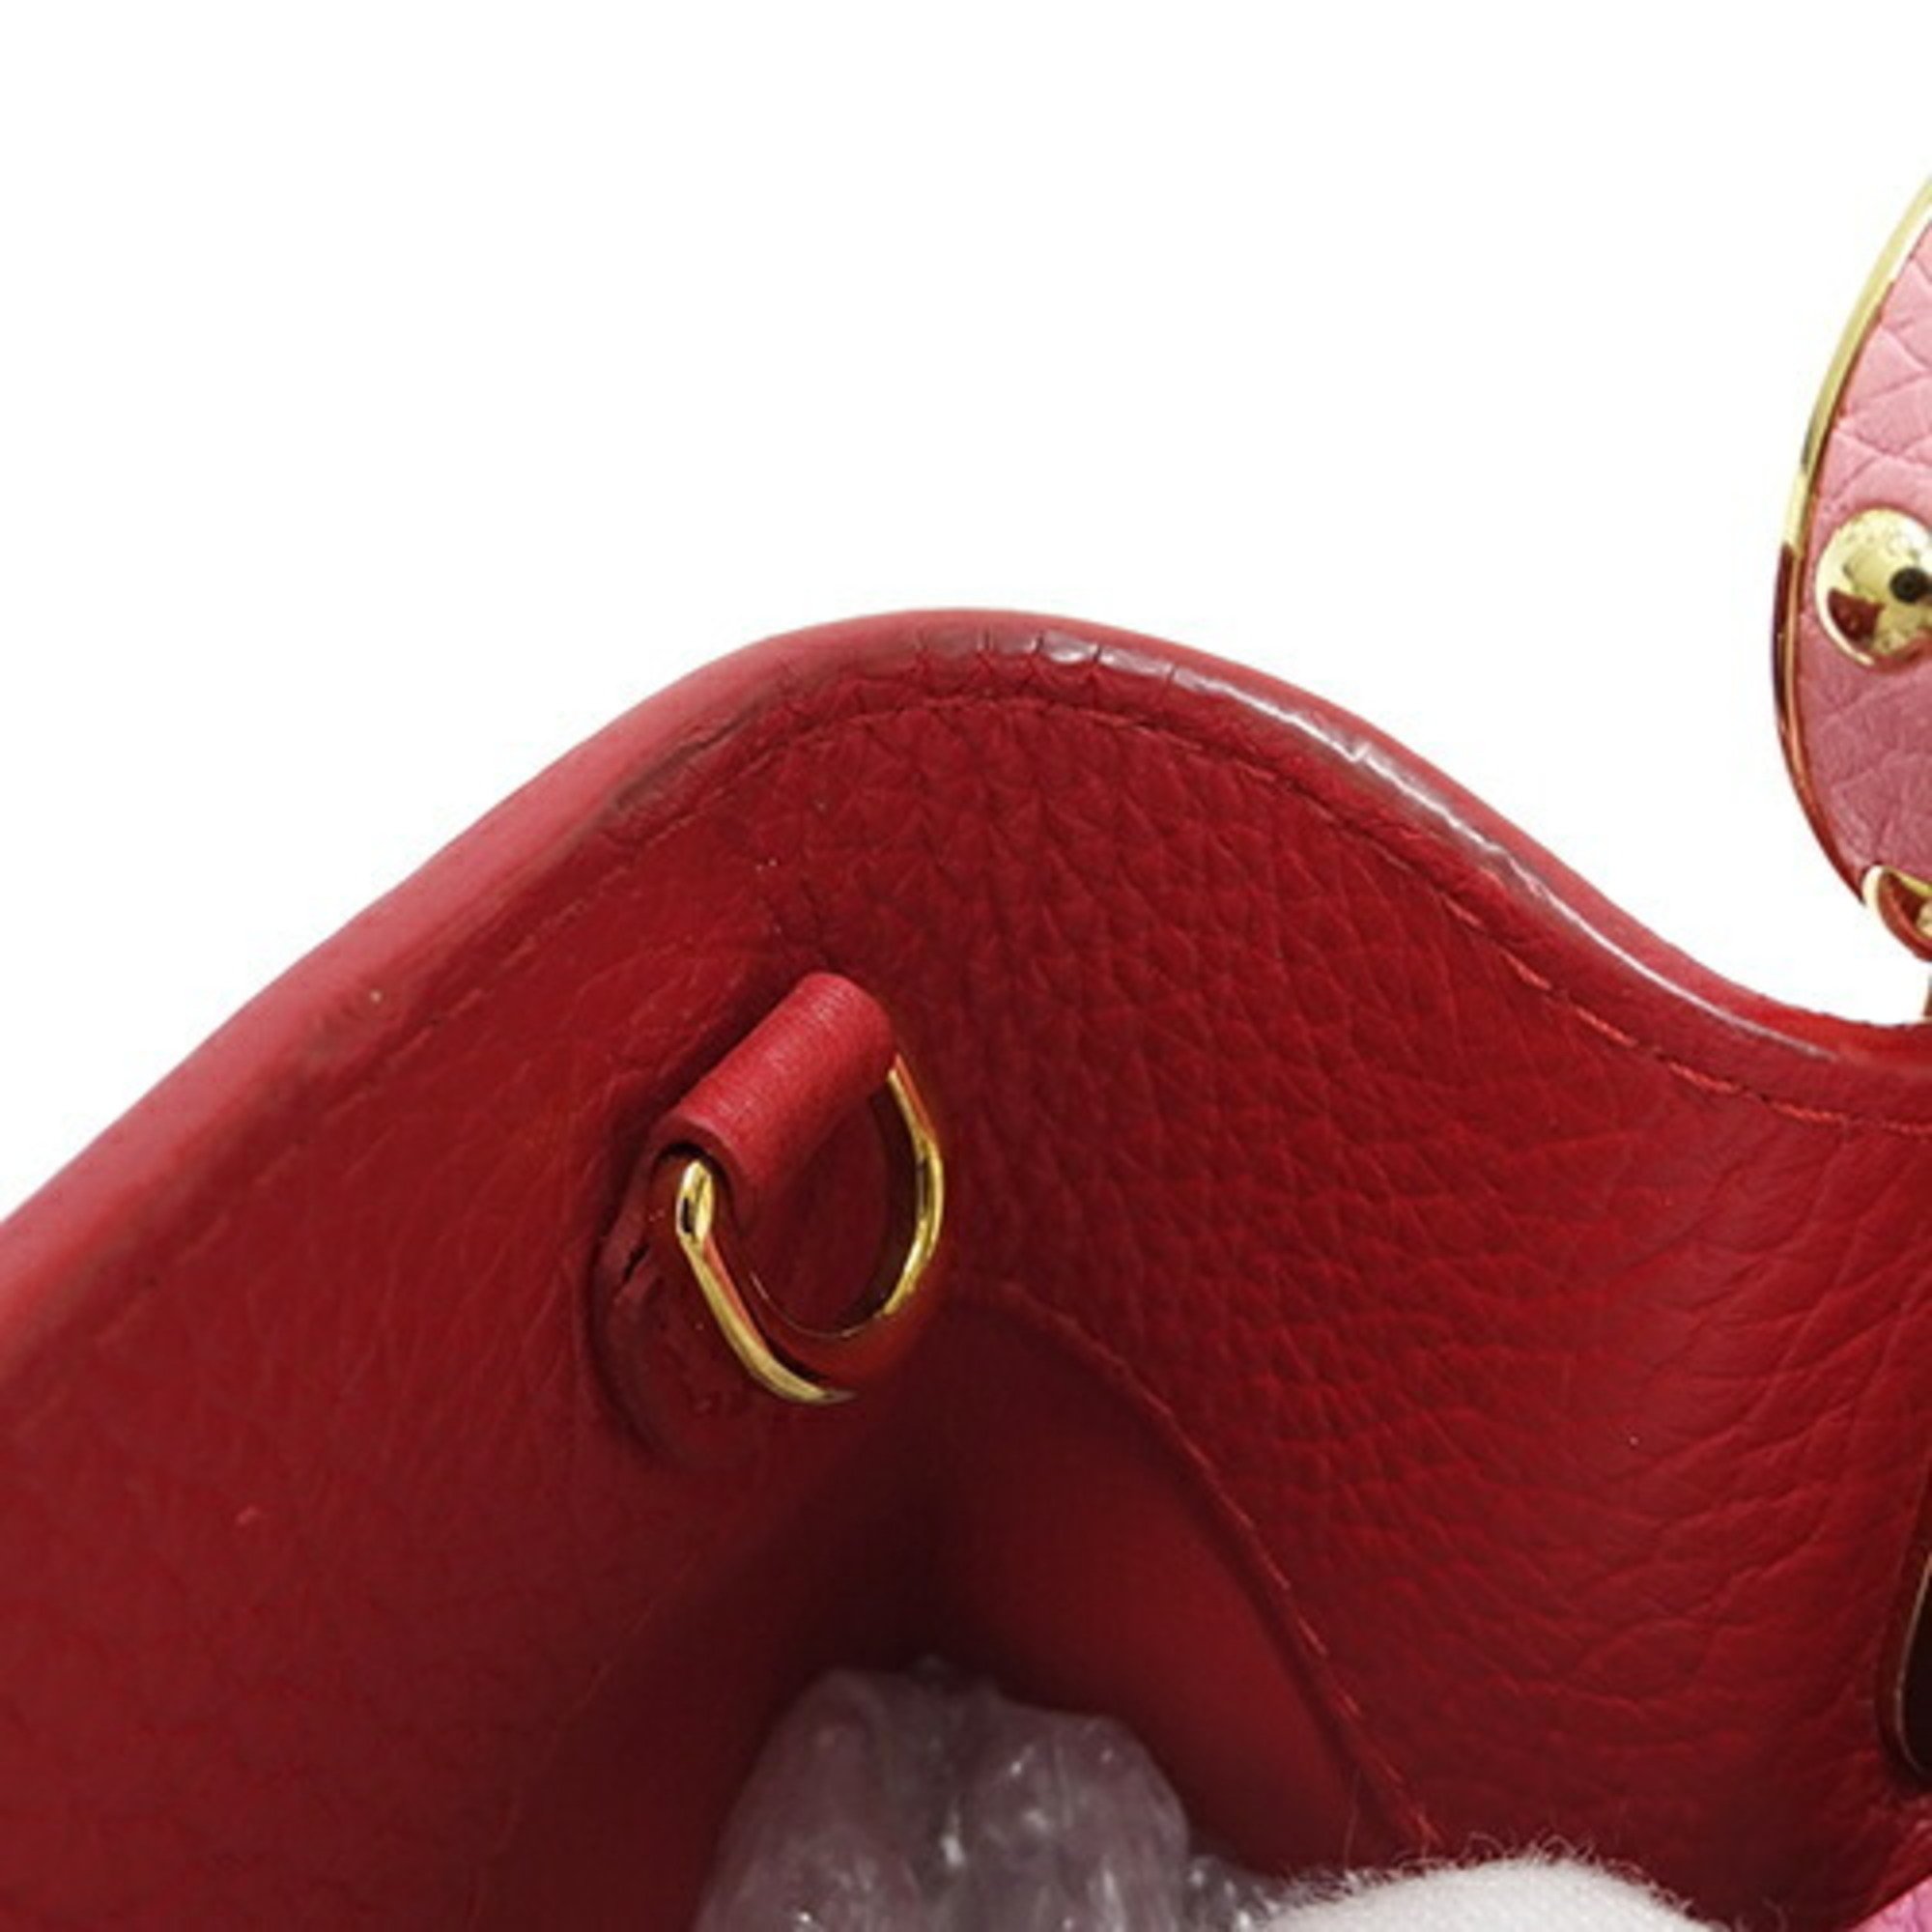 LOUIS VUITTON Bags for Women Handbags Shoulder 2way Capucines MM Taurillon Leather Red Pink Bordeaux